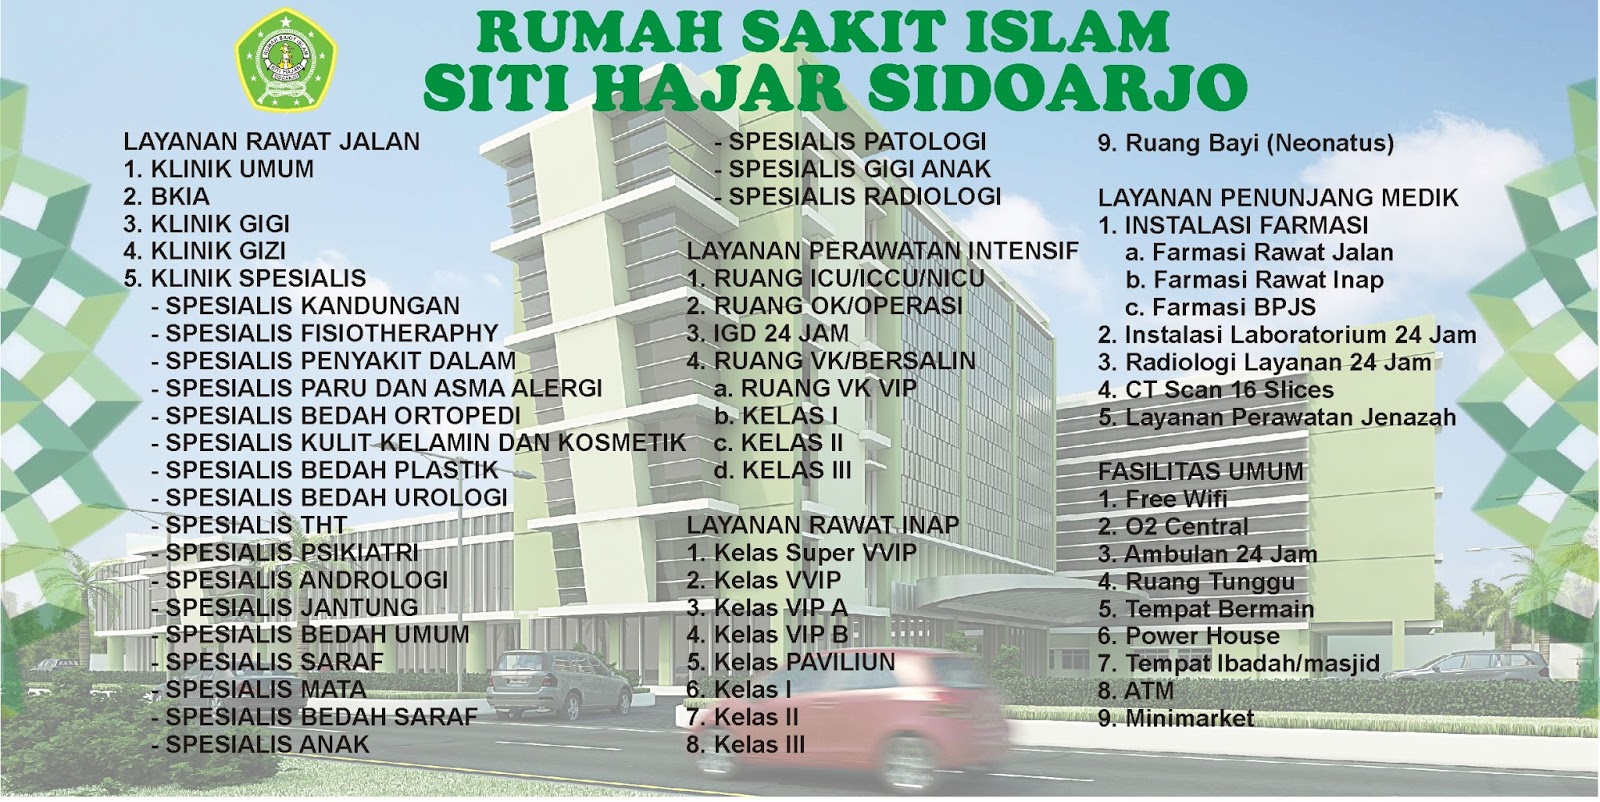 Lowongan kerja rumah sakit islam jakarta timur layanan 24 